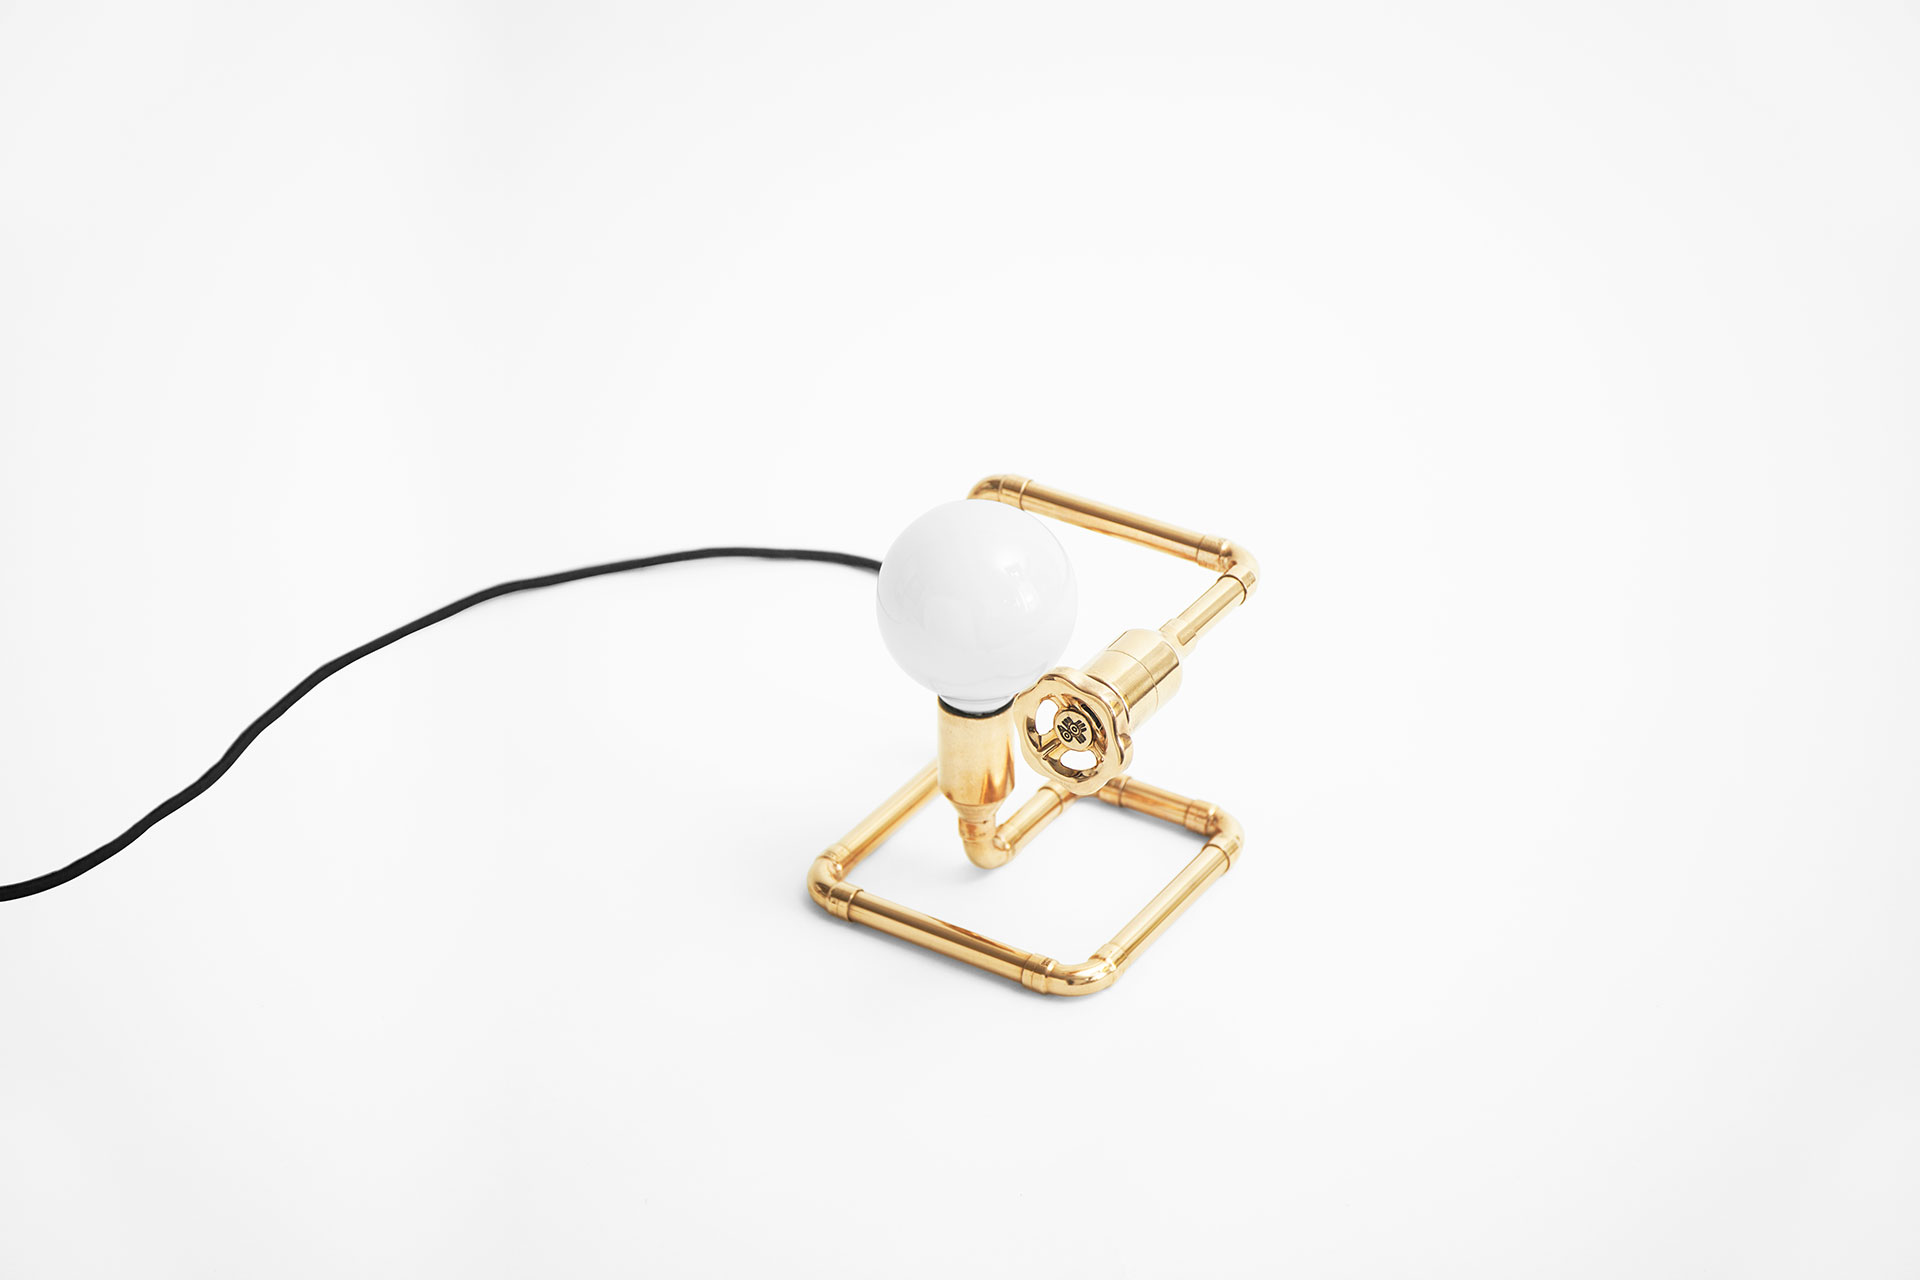 Minimalist desk lamp in gold brass metal finish manufactured by euopean design studio